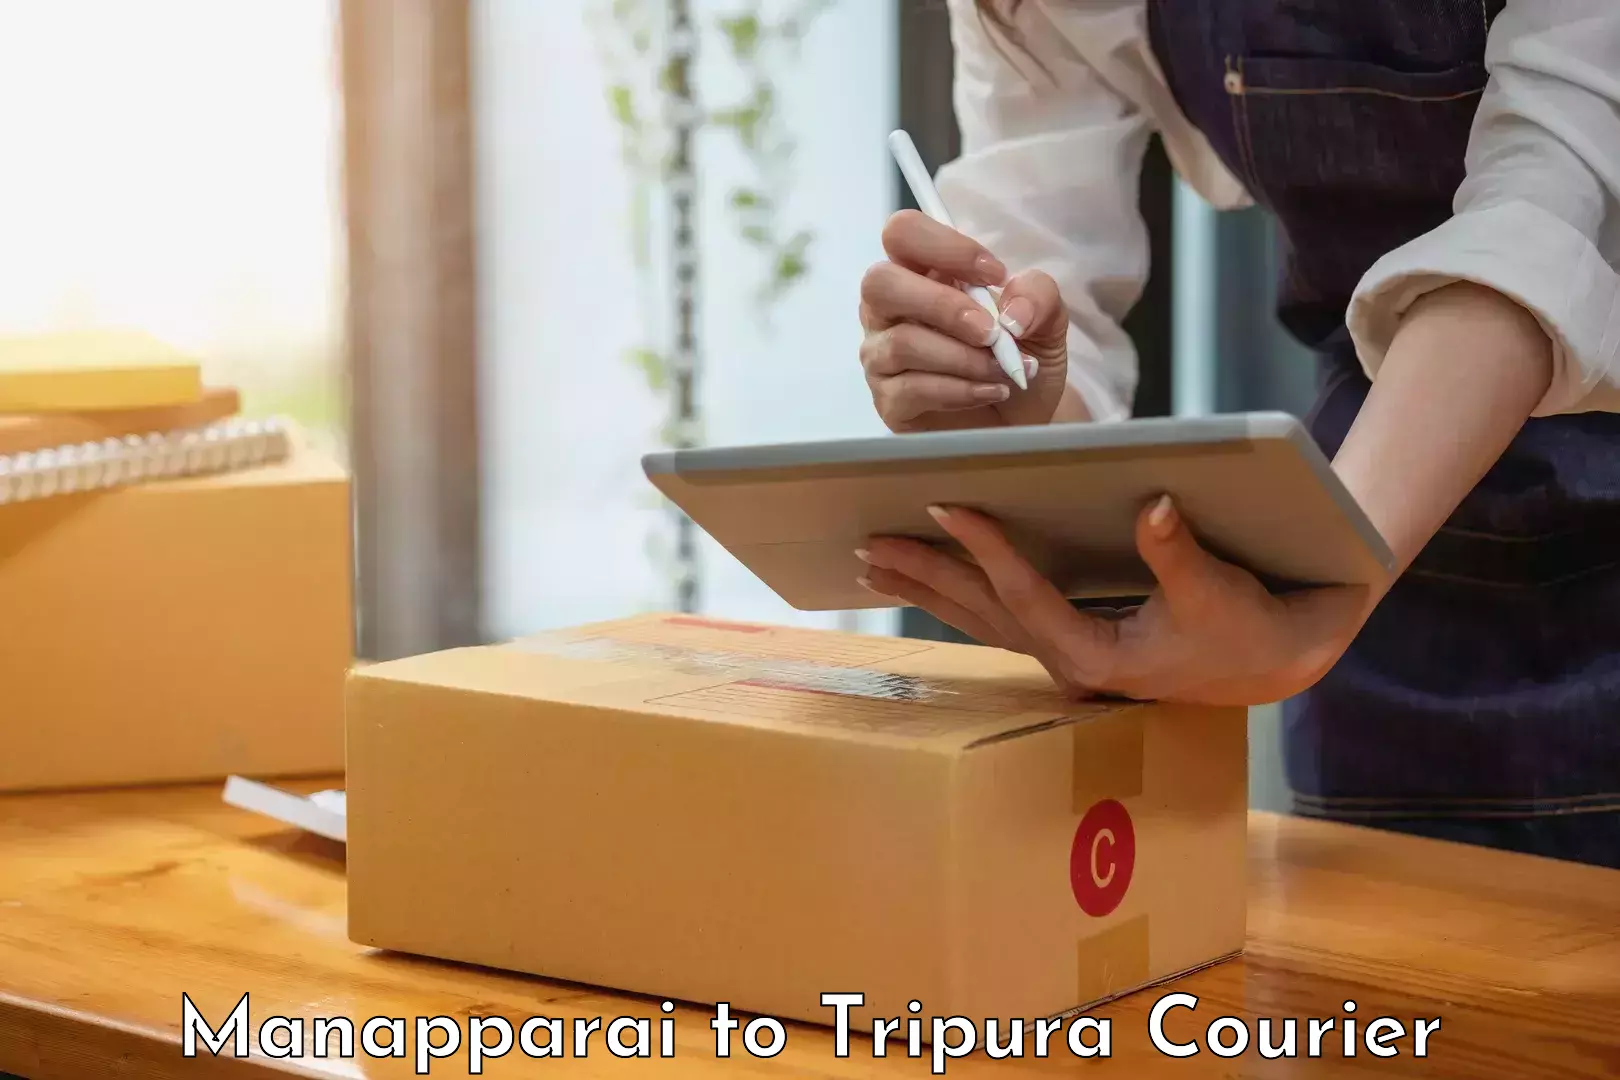 Courier app Manapparai to Amarpur